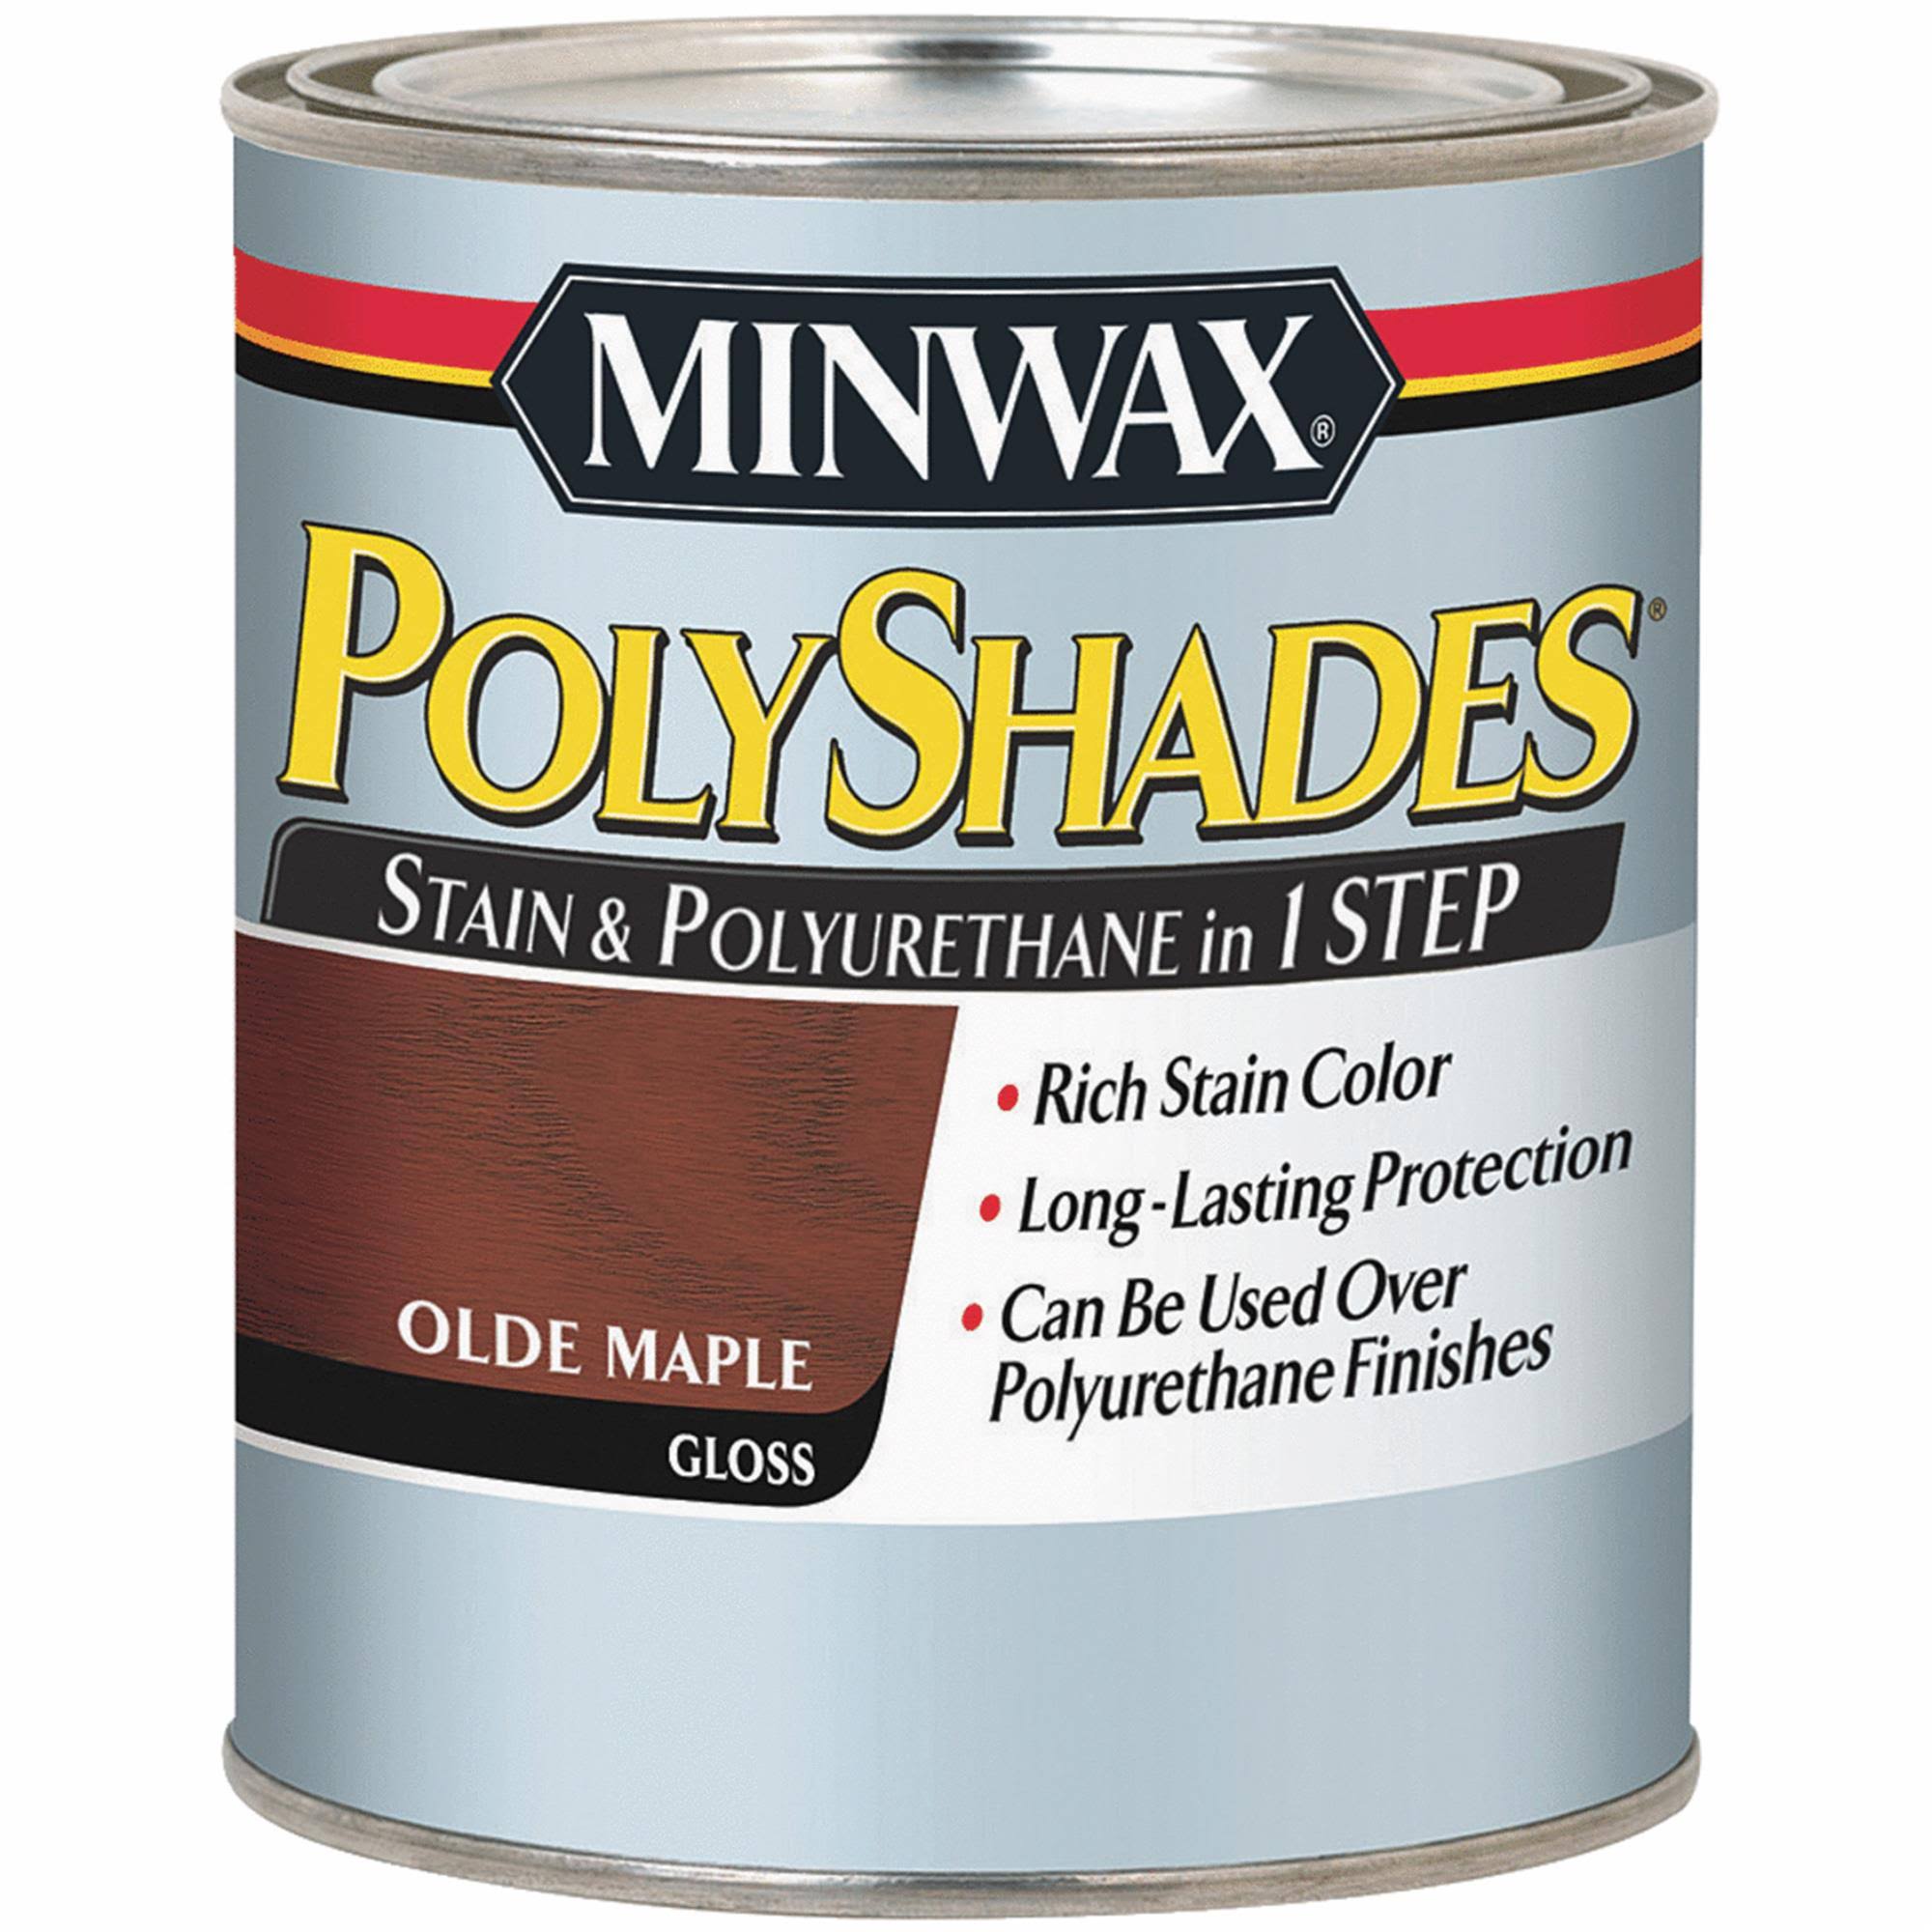 Minwax Polyshades Gloss Stain - 1/2 Pint, Old Maple